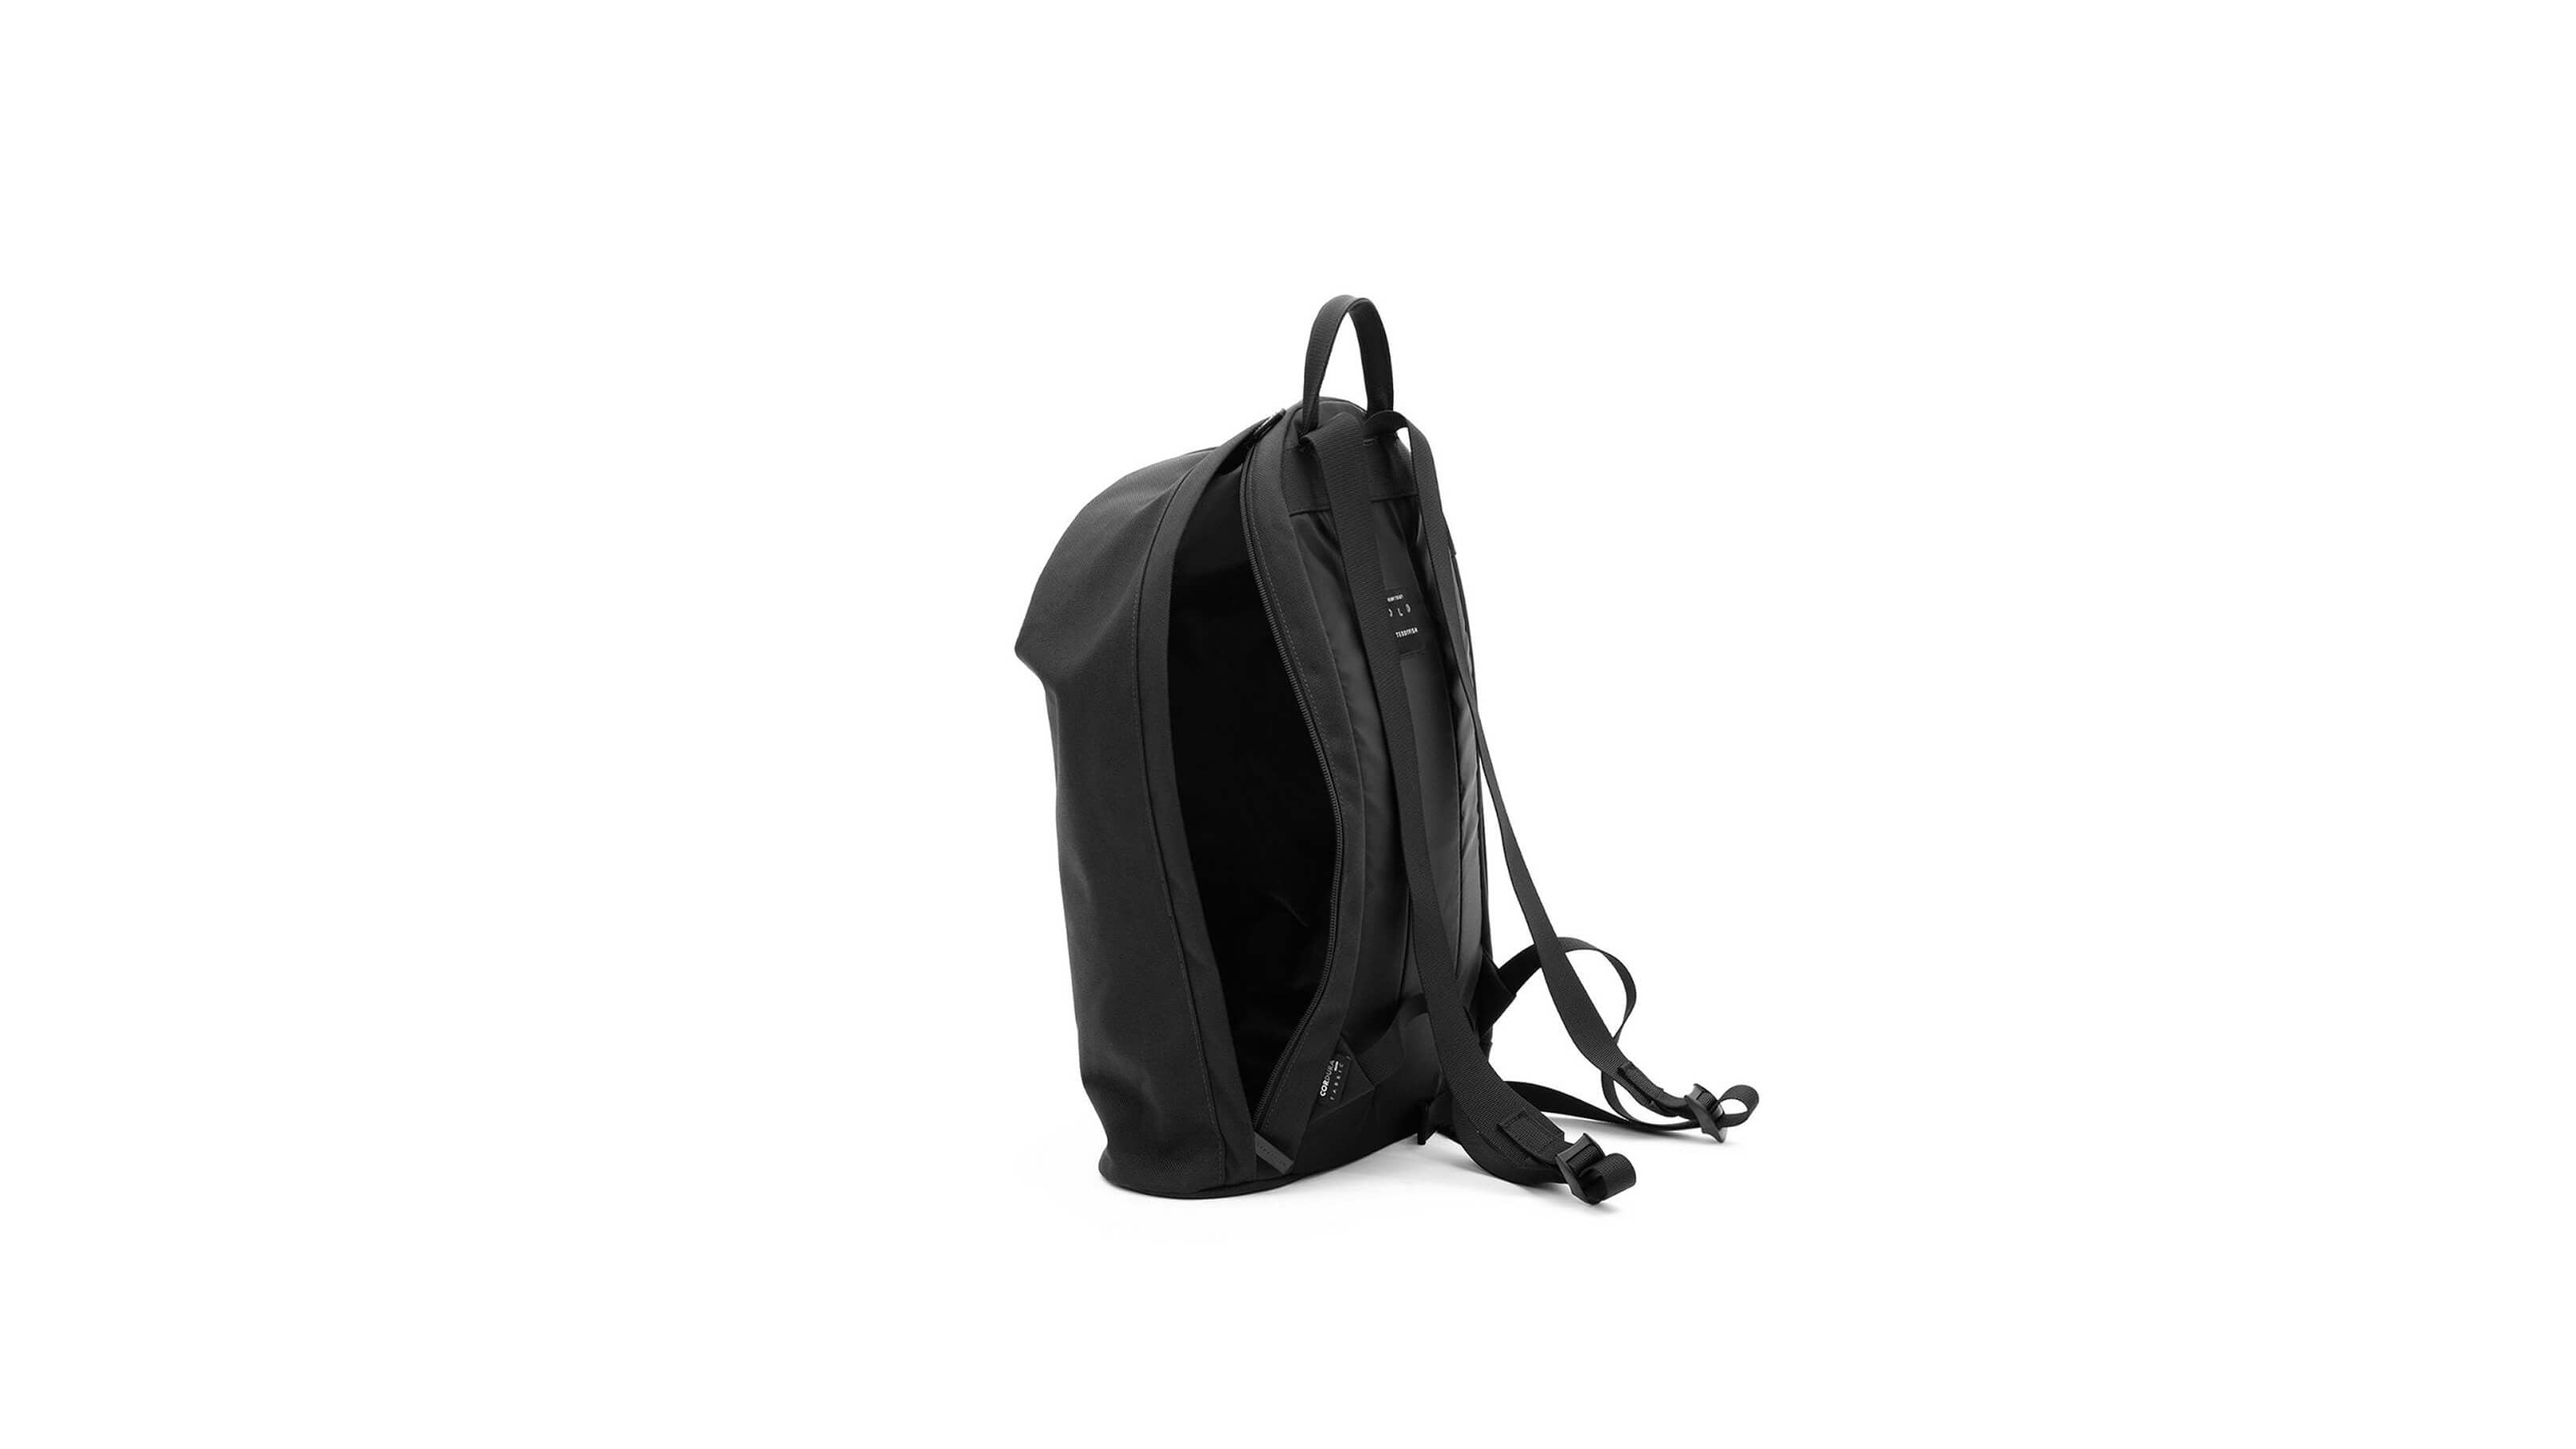 Standard CORDURA Backpack | Designed by Teddyfish